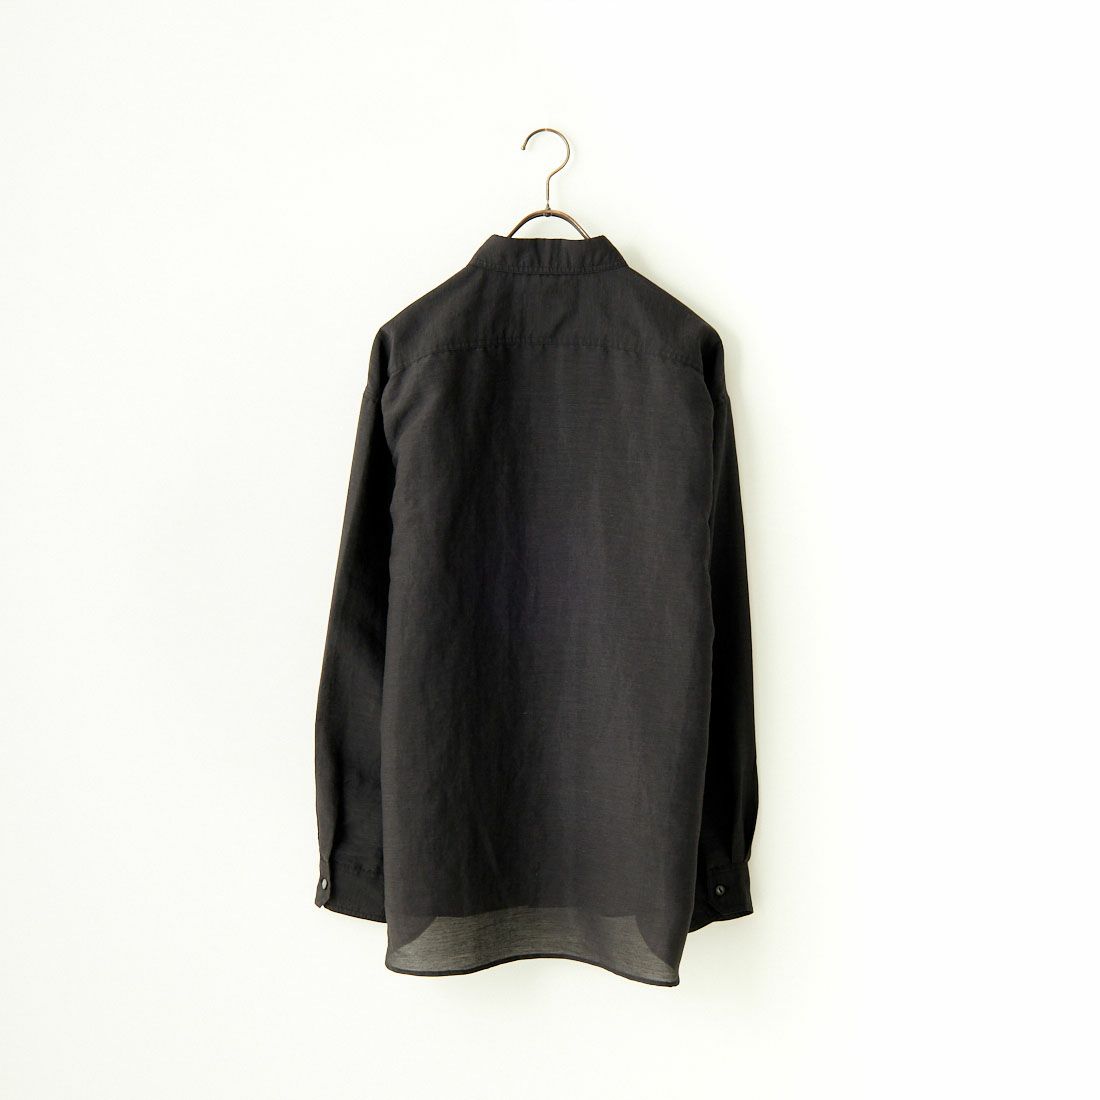 Vincent et Mireille [ヴァンソン エ ミレイユ] ロングスリーブシャツ [VM241LI00130] 09 BLACK